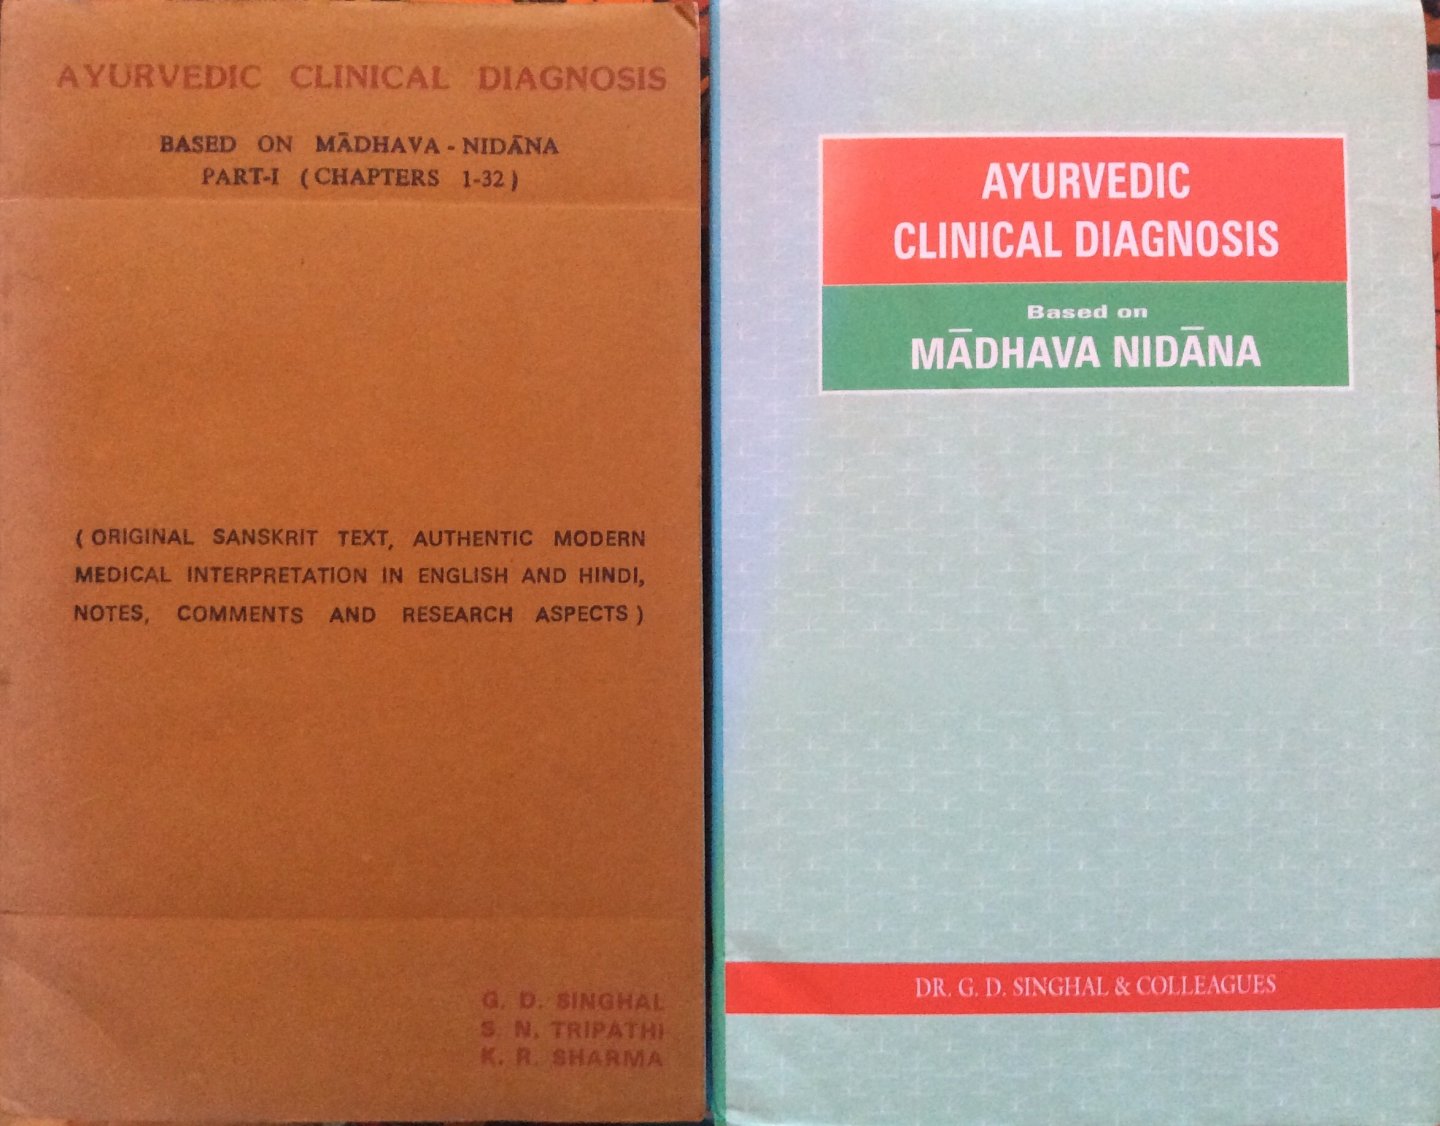 Singhal, G.D. / Tripathi, S.N. / Sharma, K.R. - Ayurvedic clinical diagnosis, based on Madhava Nidana / part I and II (69 chapters)